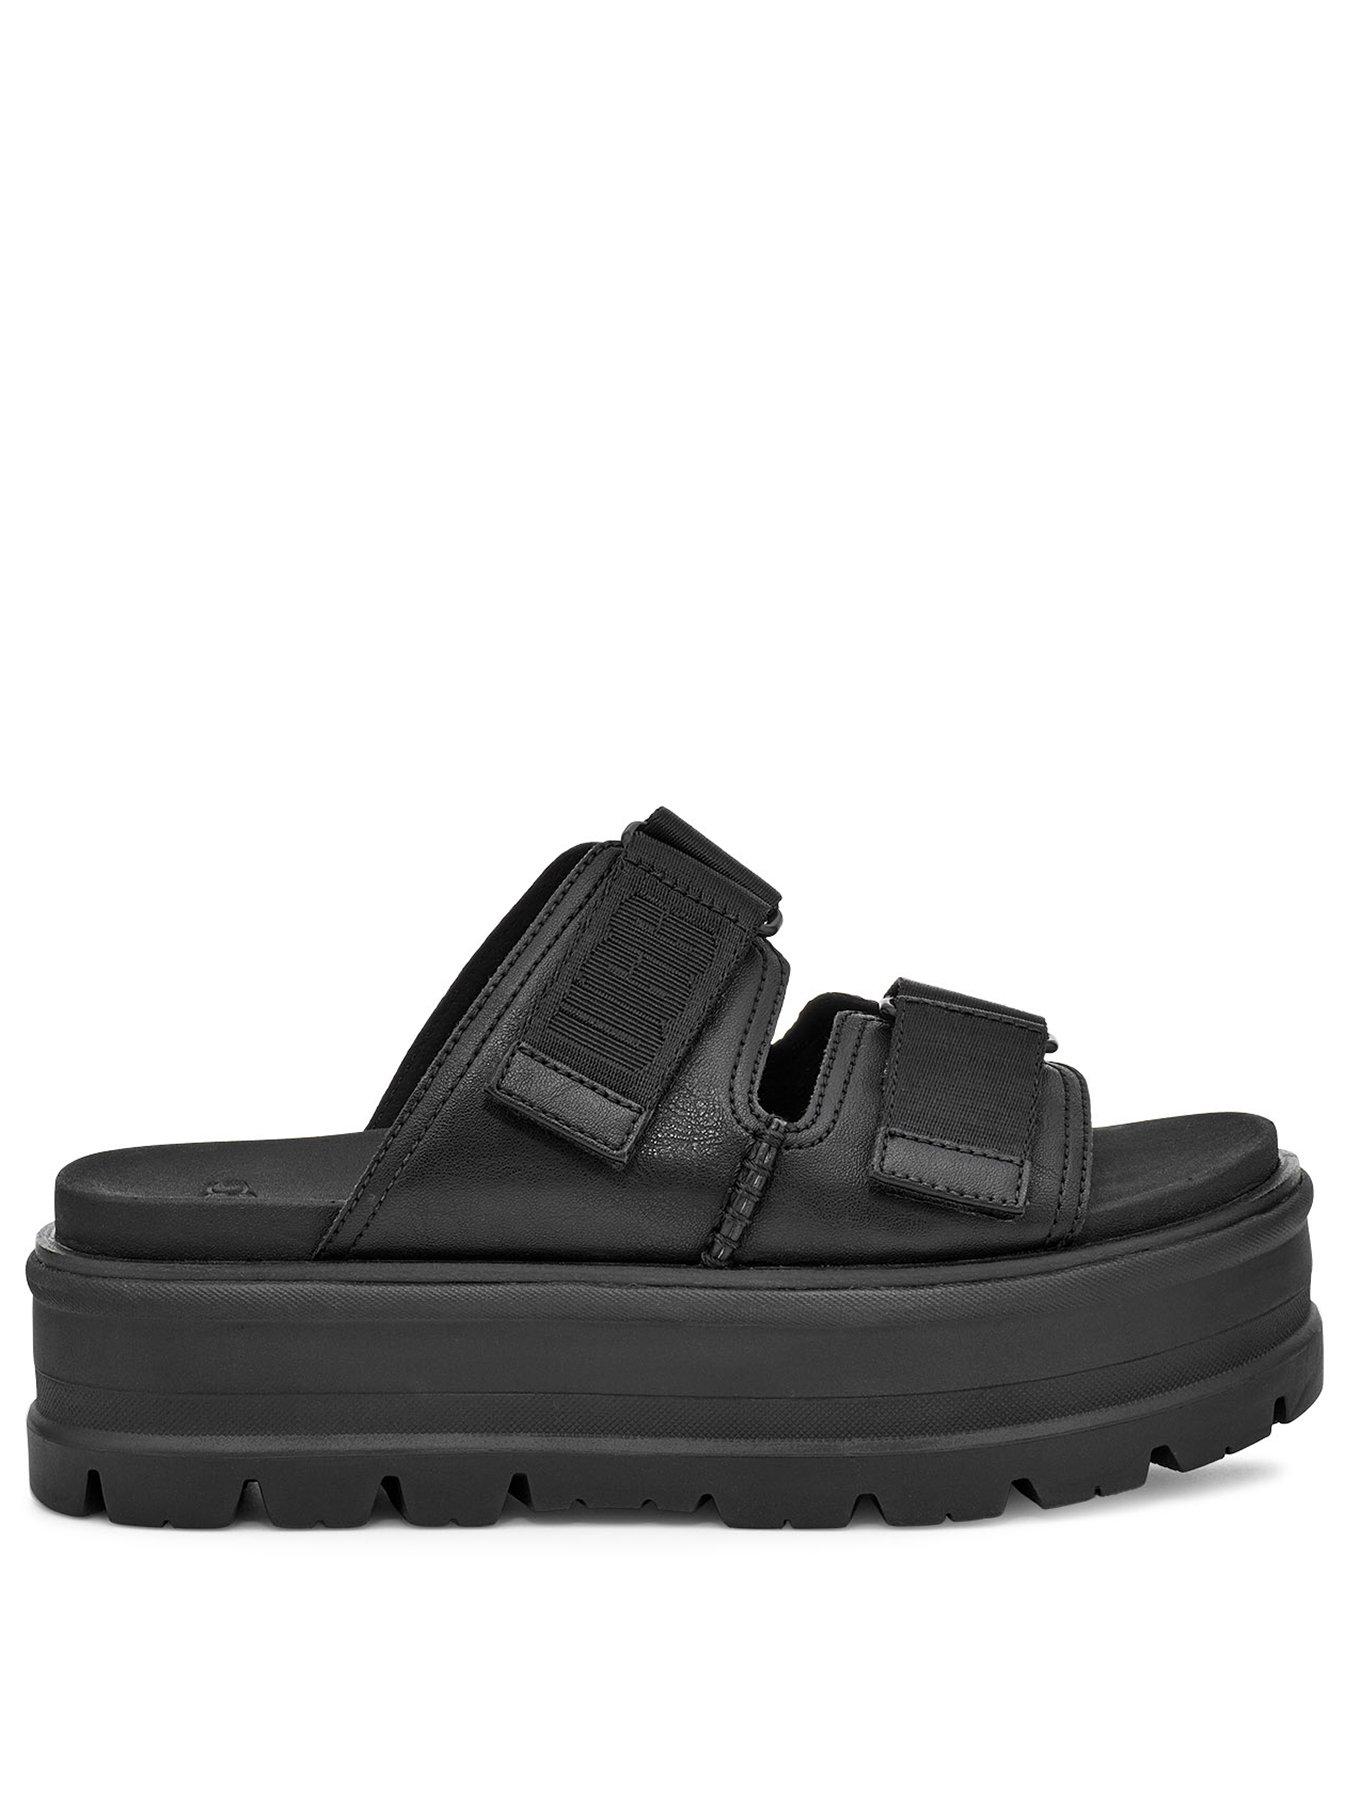 UGG Clem Wedge Sandals - Black | very.co.uk